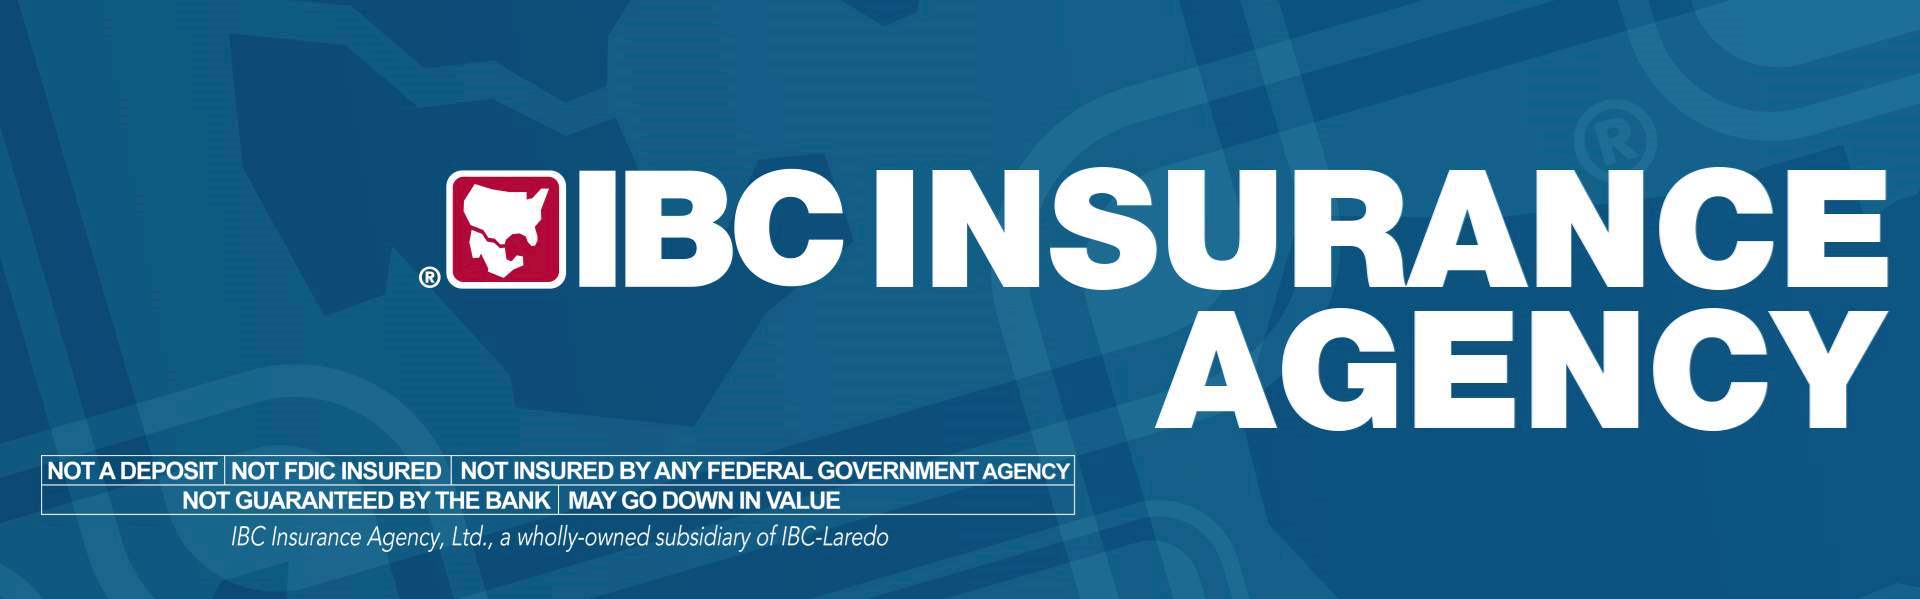 About IBC Insurance Agency, Ltd.